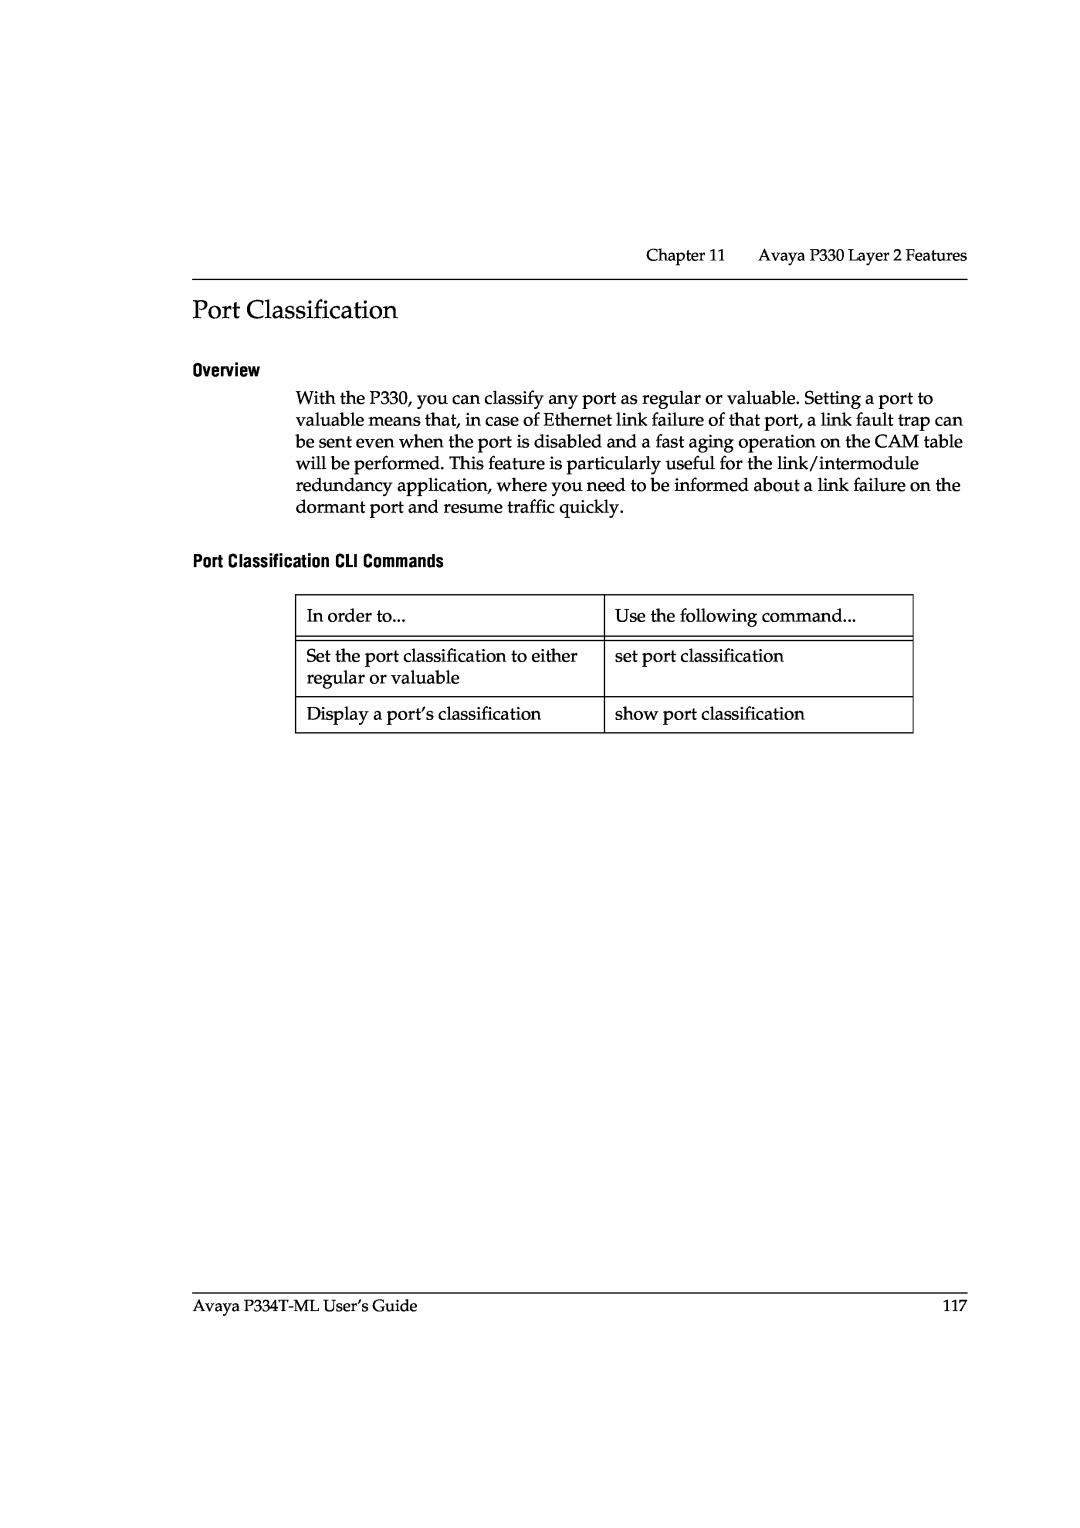 Avaya P3343T-ML manual Port Classification CLI Commands, Overview 